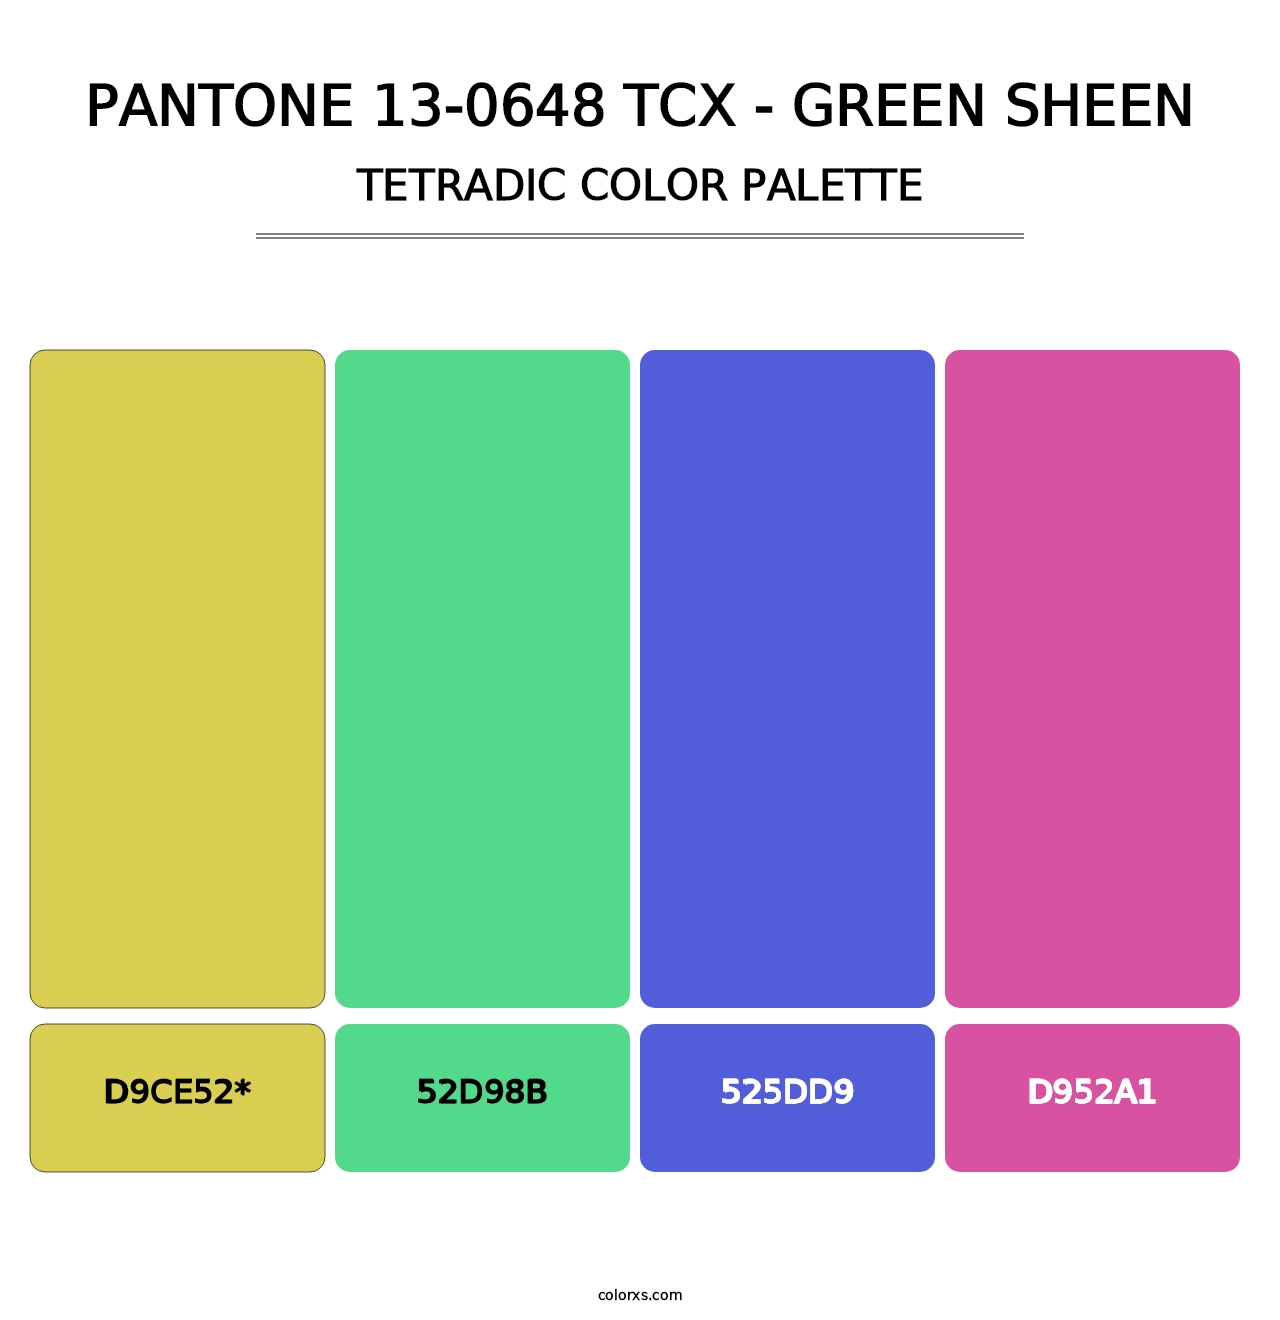 PANTONE 13-0648 TCX - Green Sheen - Tetradic Color Palette